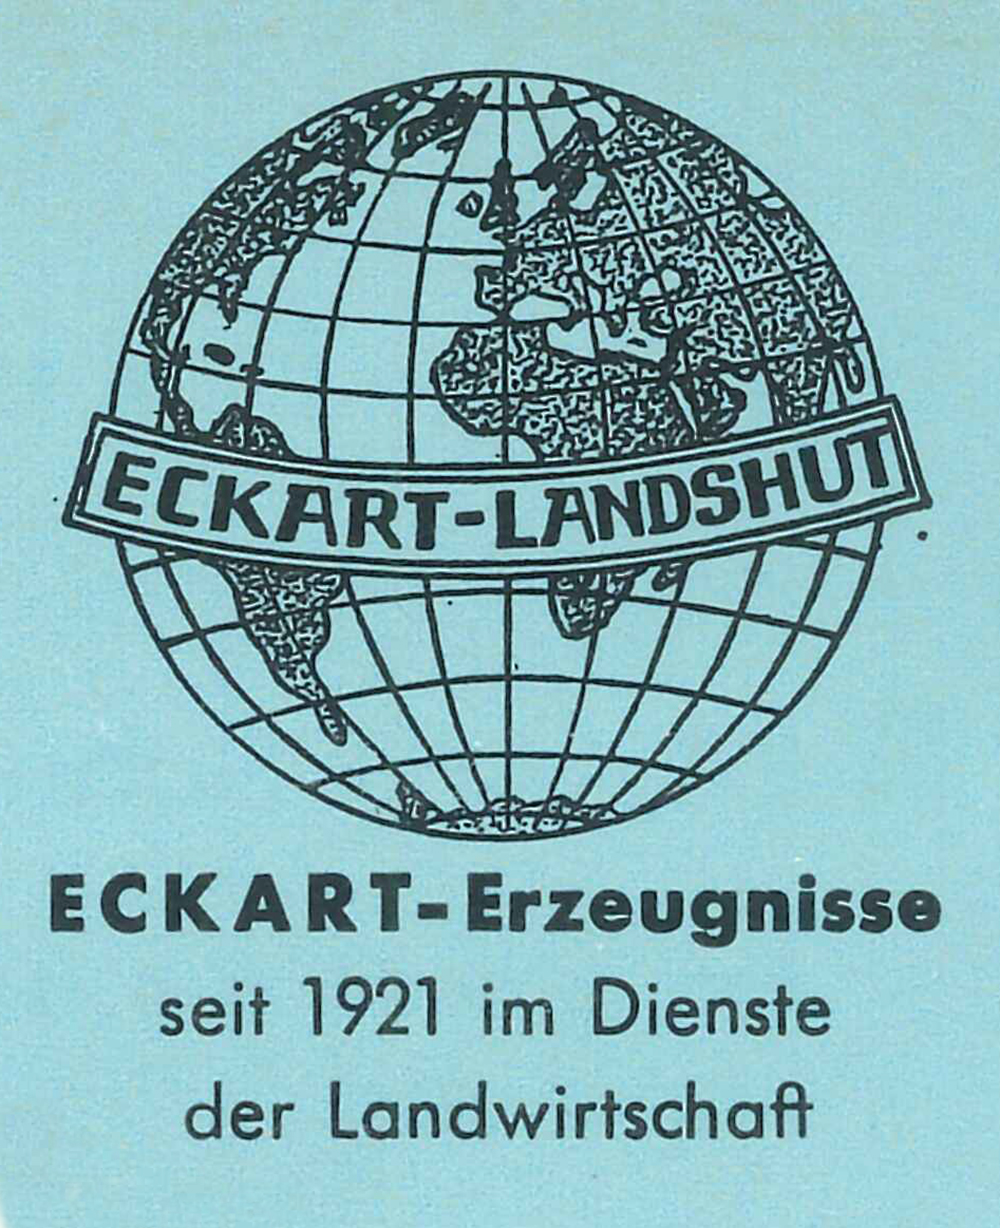 Josef Eckart & Söhne